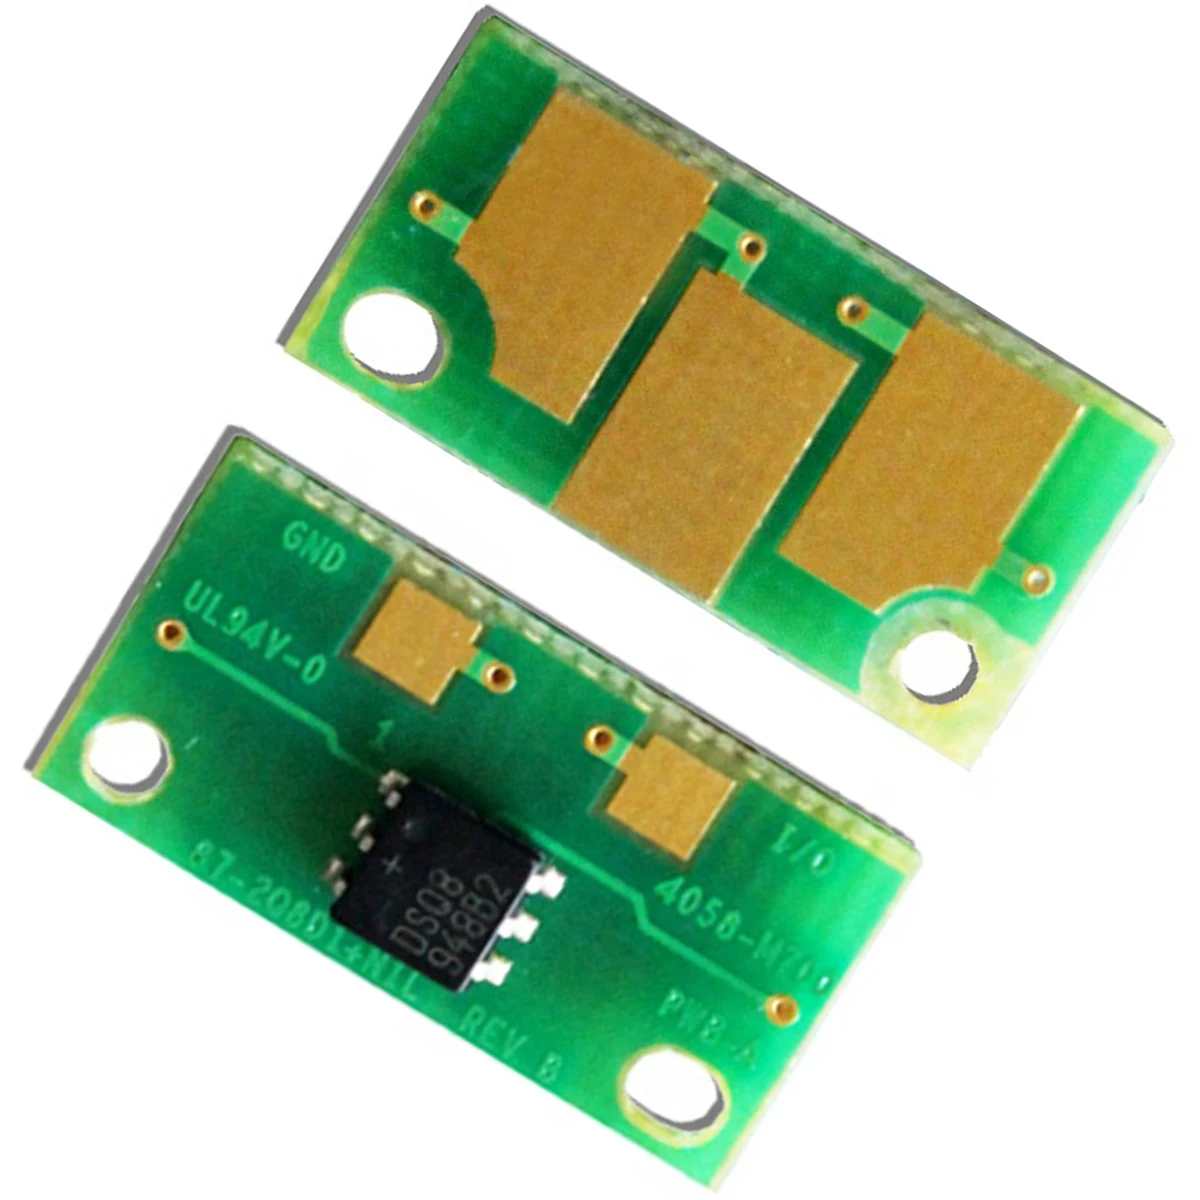 Toner Chip Reset for Konica Minolta 2400W/2500W/2430W/2430DL/2450MFP/2480MFP/2490MFP/2530DL/2550